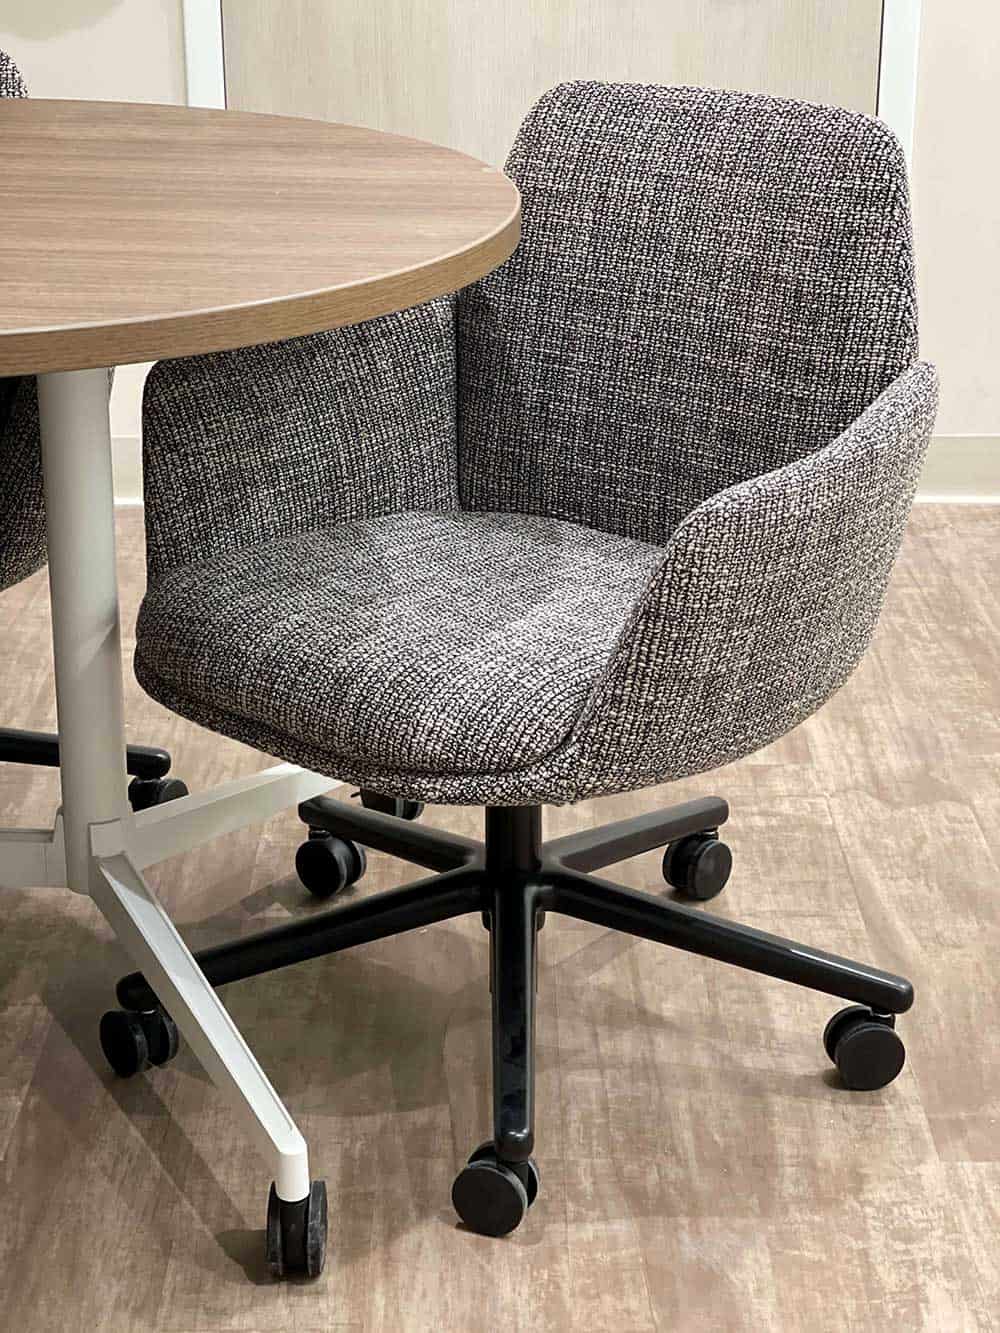 Gray Haworth Poppy Chair in a Medical Facility